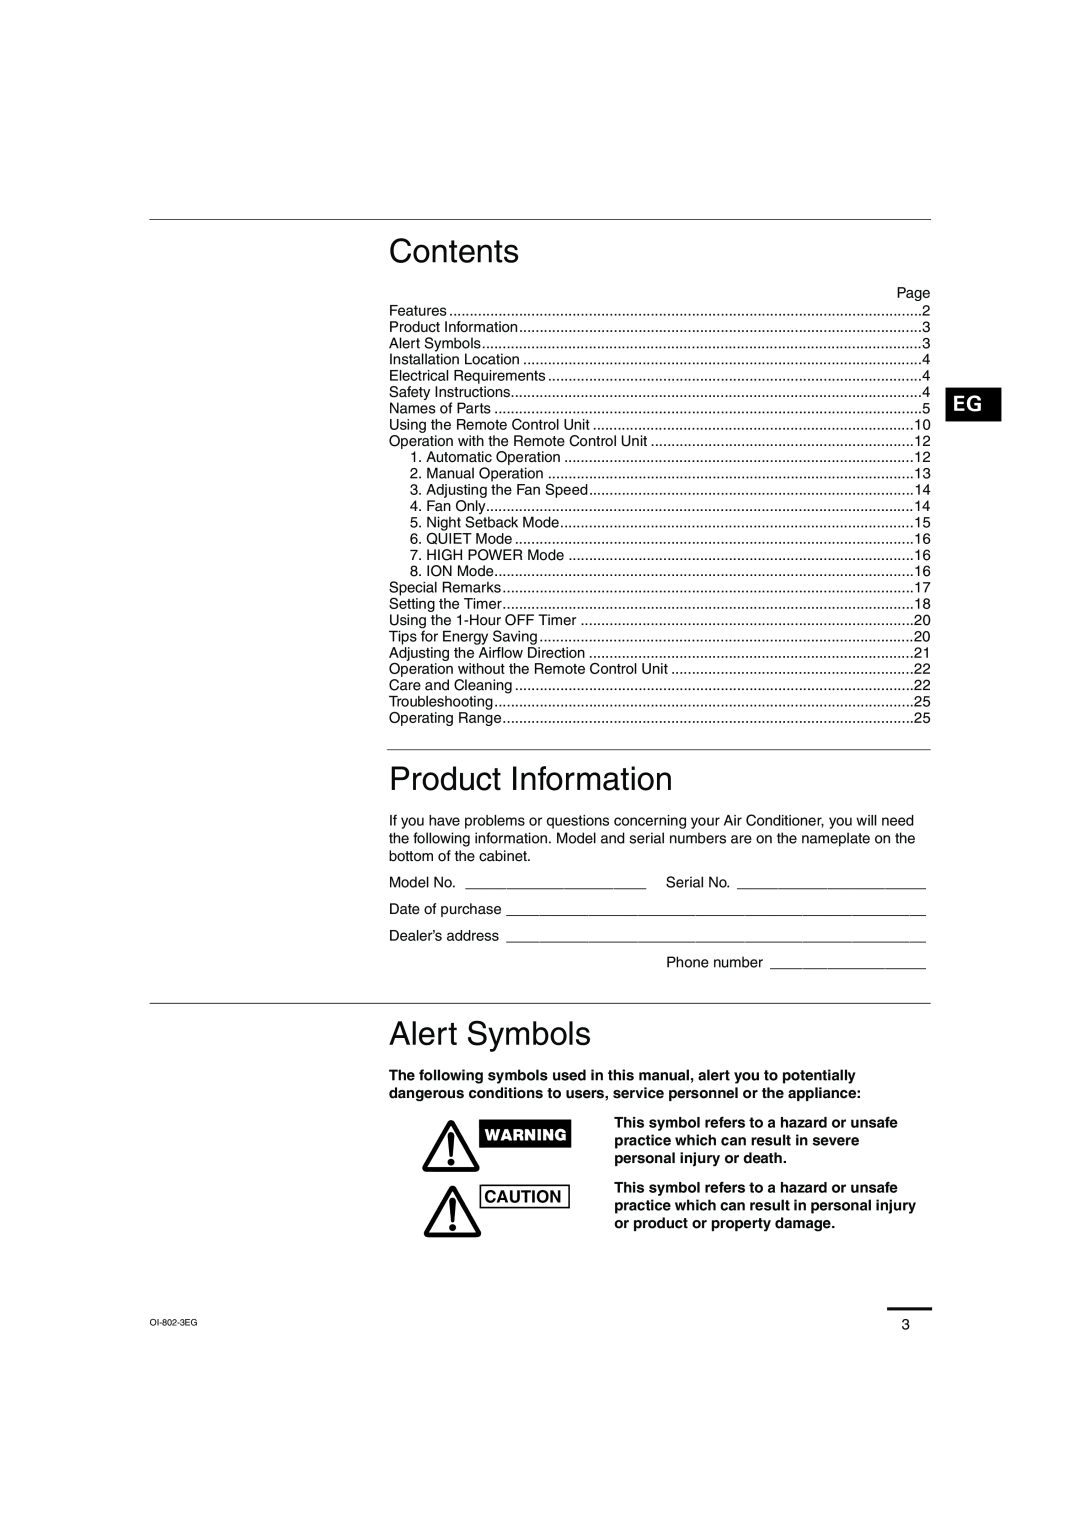 Sanyo KHS0971, KHS1271 instruction manual Contents, Product Information, Alert Symbols, Page 